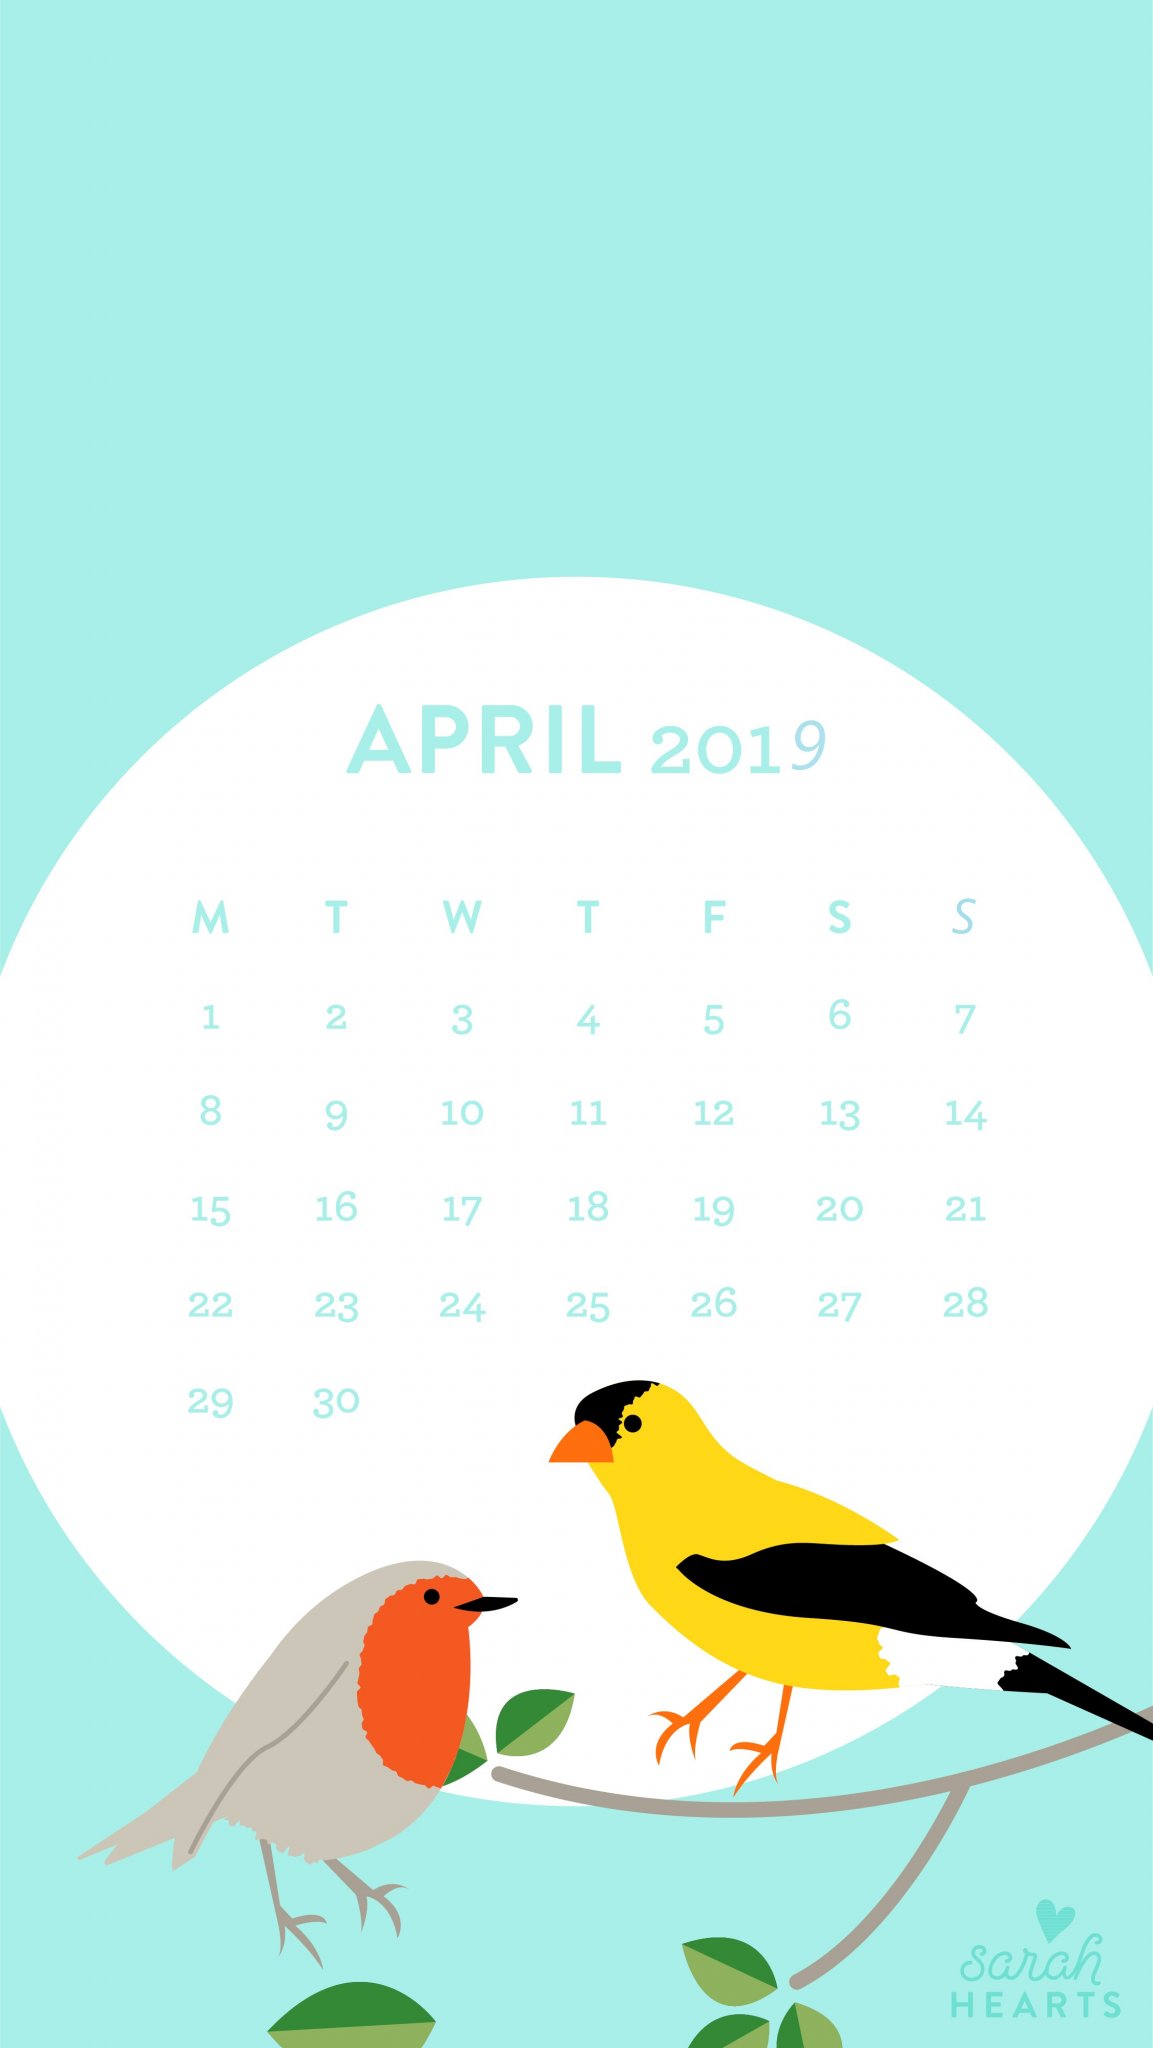 April 2019 iPhone Calendar Wallpaper